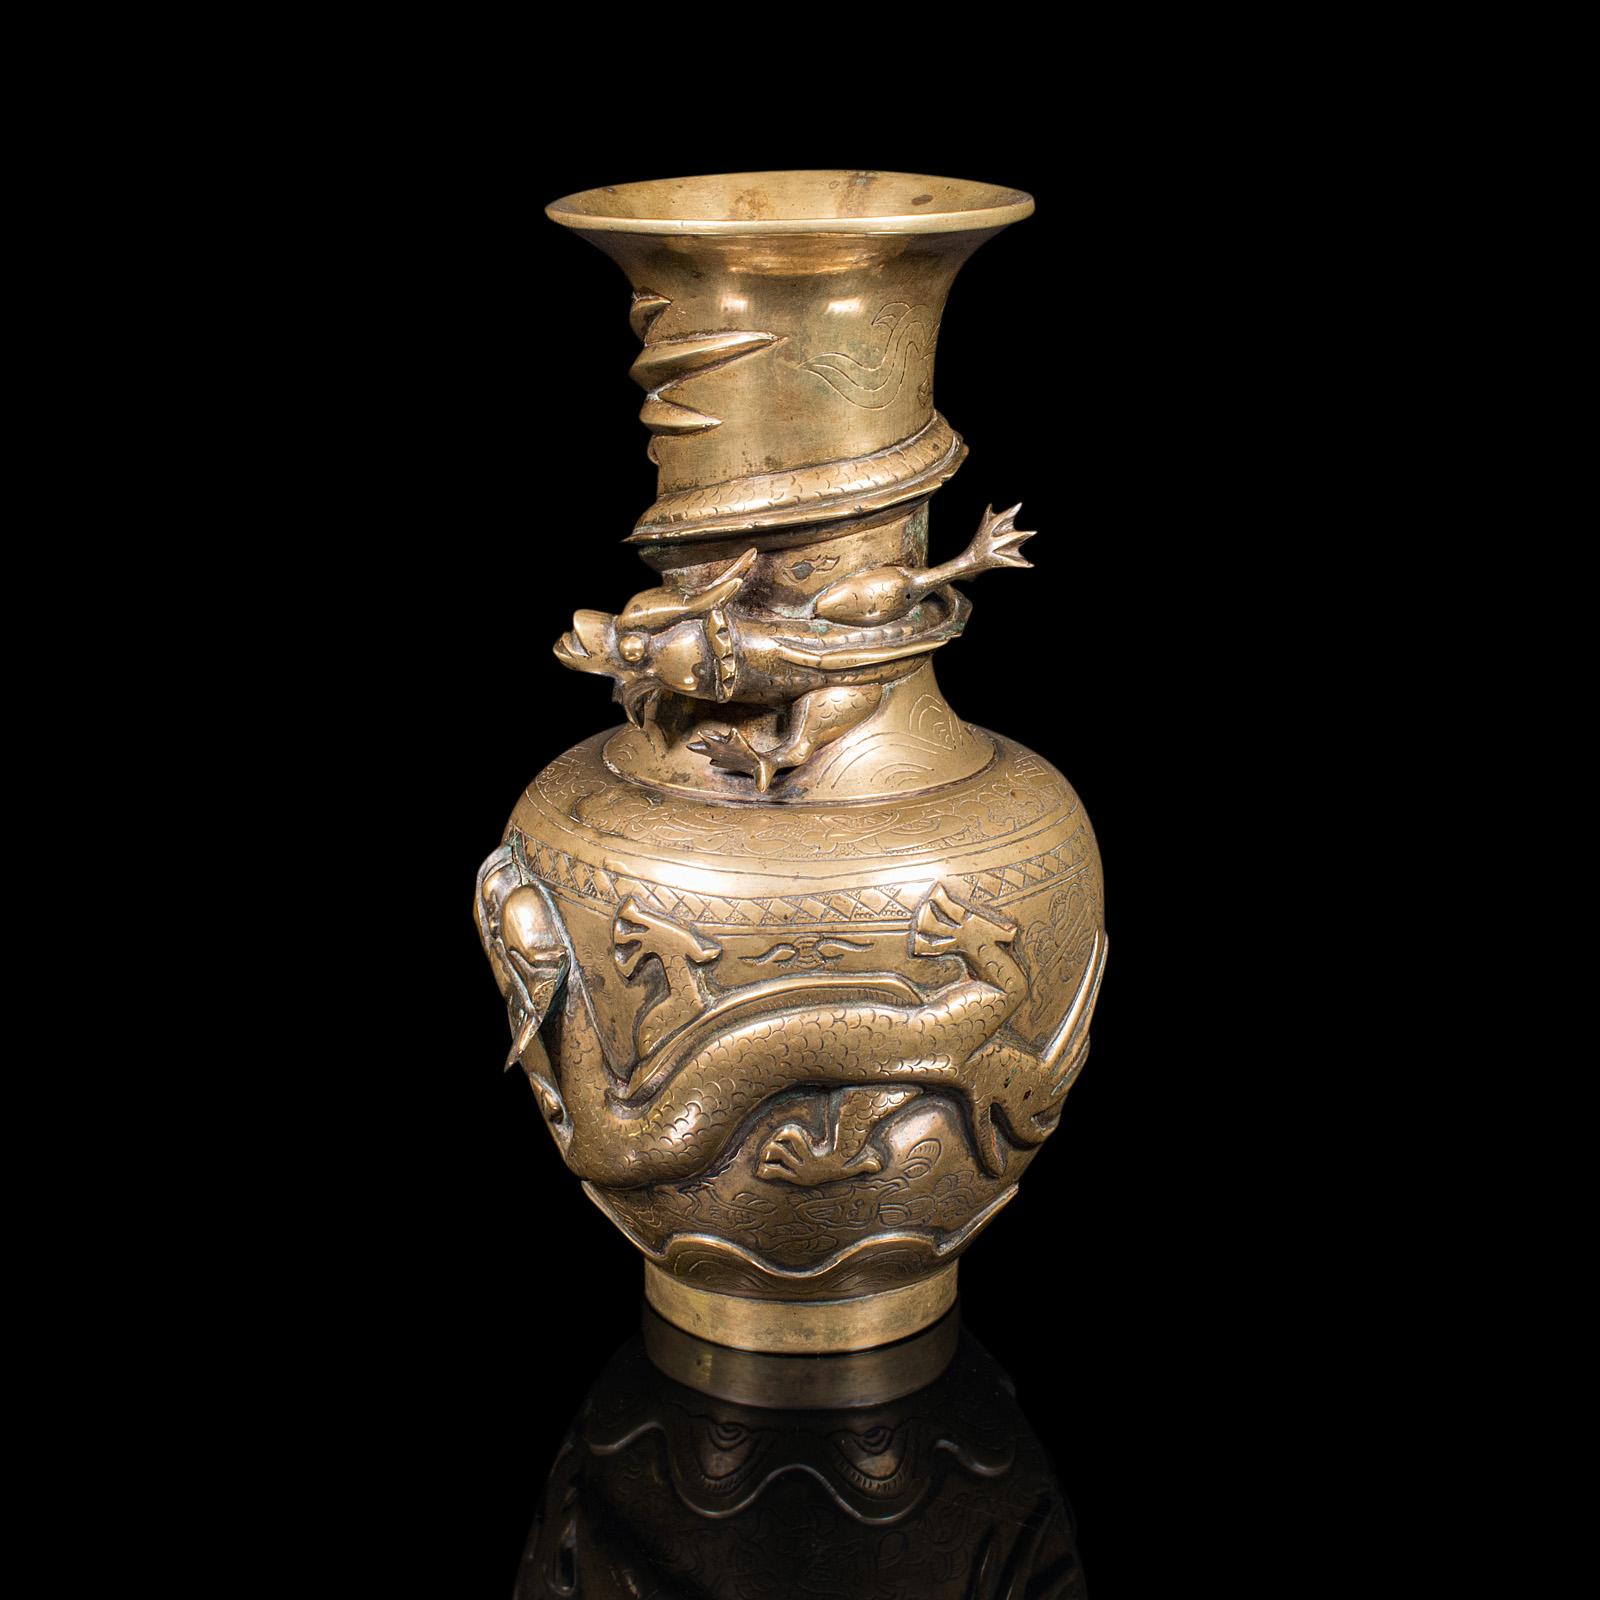 Antique Decorative Vase, Chinese, Brass, Flower Urn, Dragon Motif, Victorian In Good Condition For Sale In Hele, Devon, GB